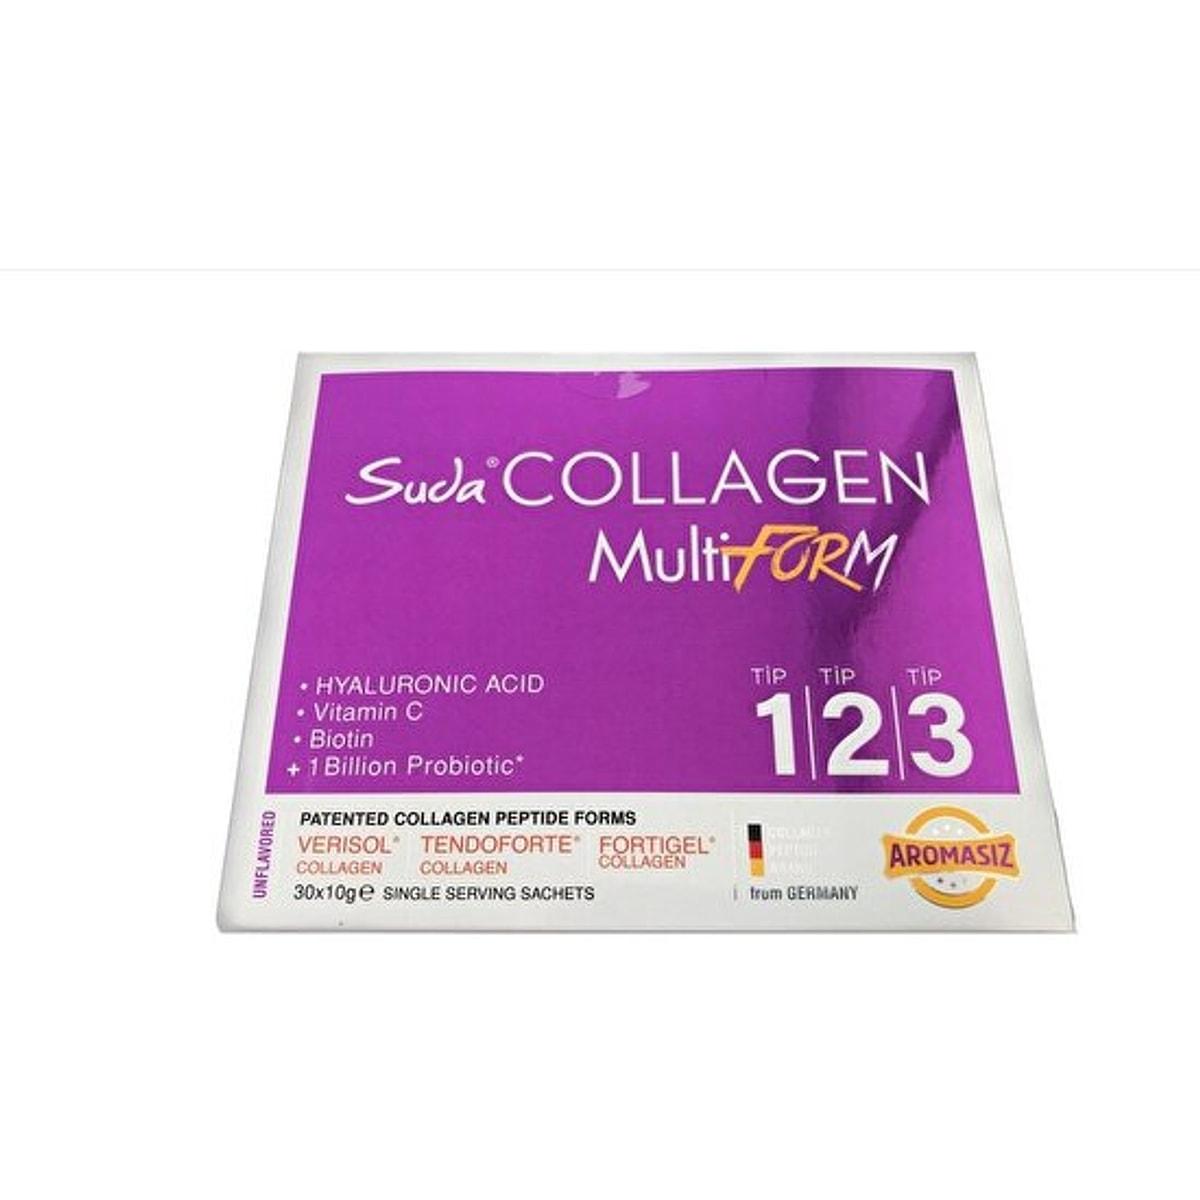 Suda Collagen Multiform. Suda collagen